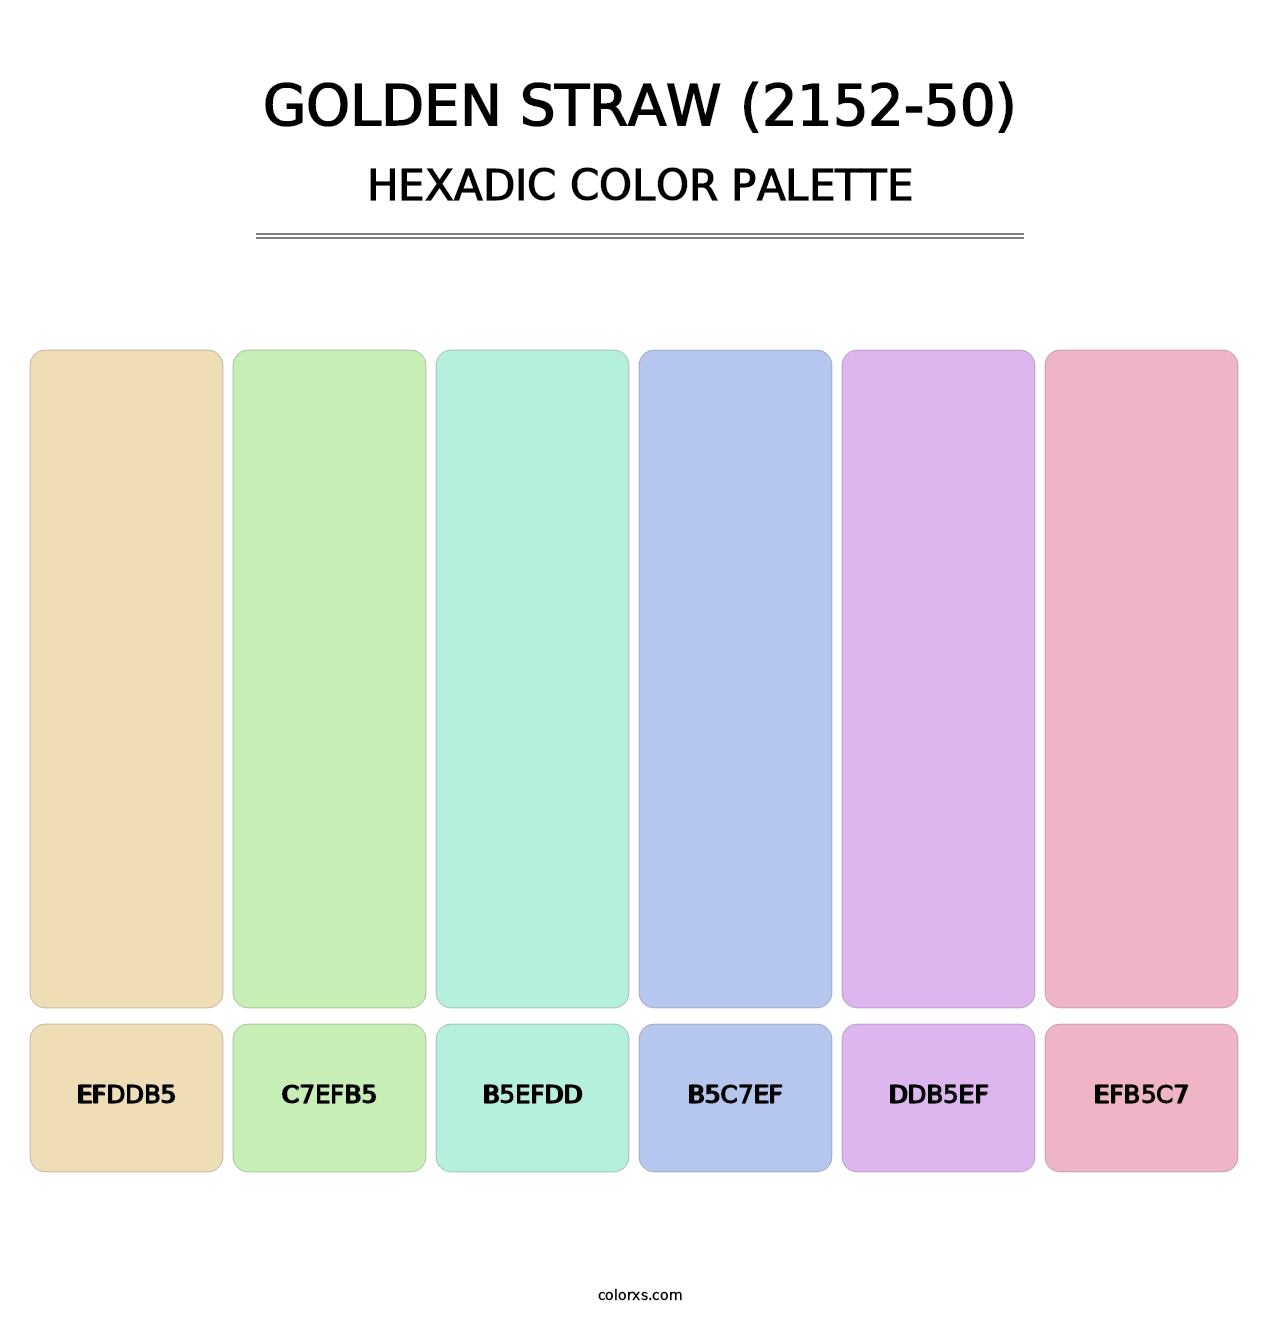 Golden Straw (2152-50) - Hexadic Color Palette